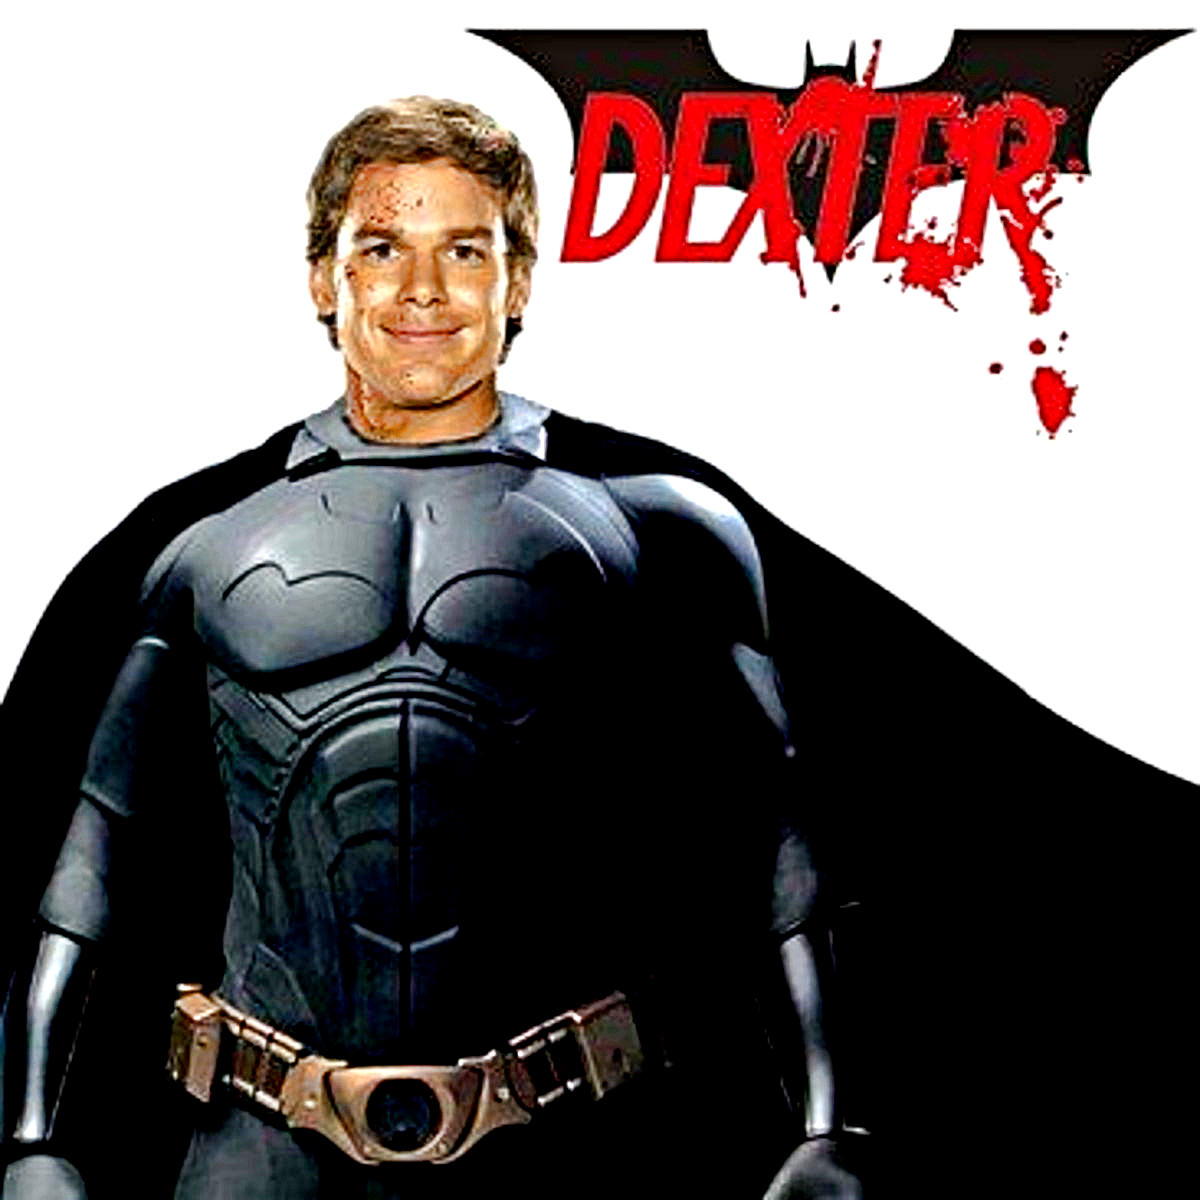 Dexter: An Autism Spectrum Superhero